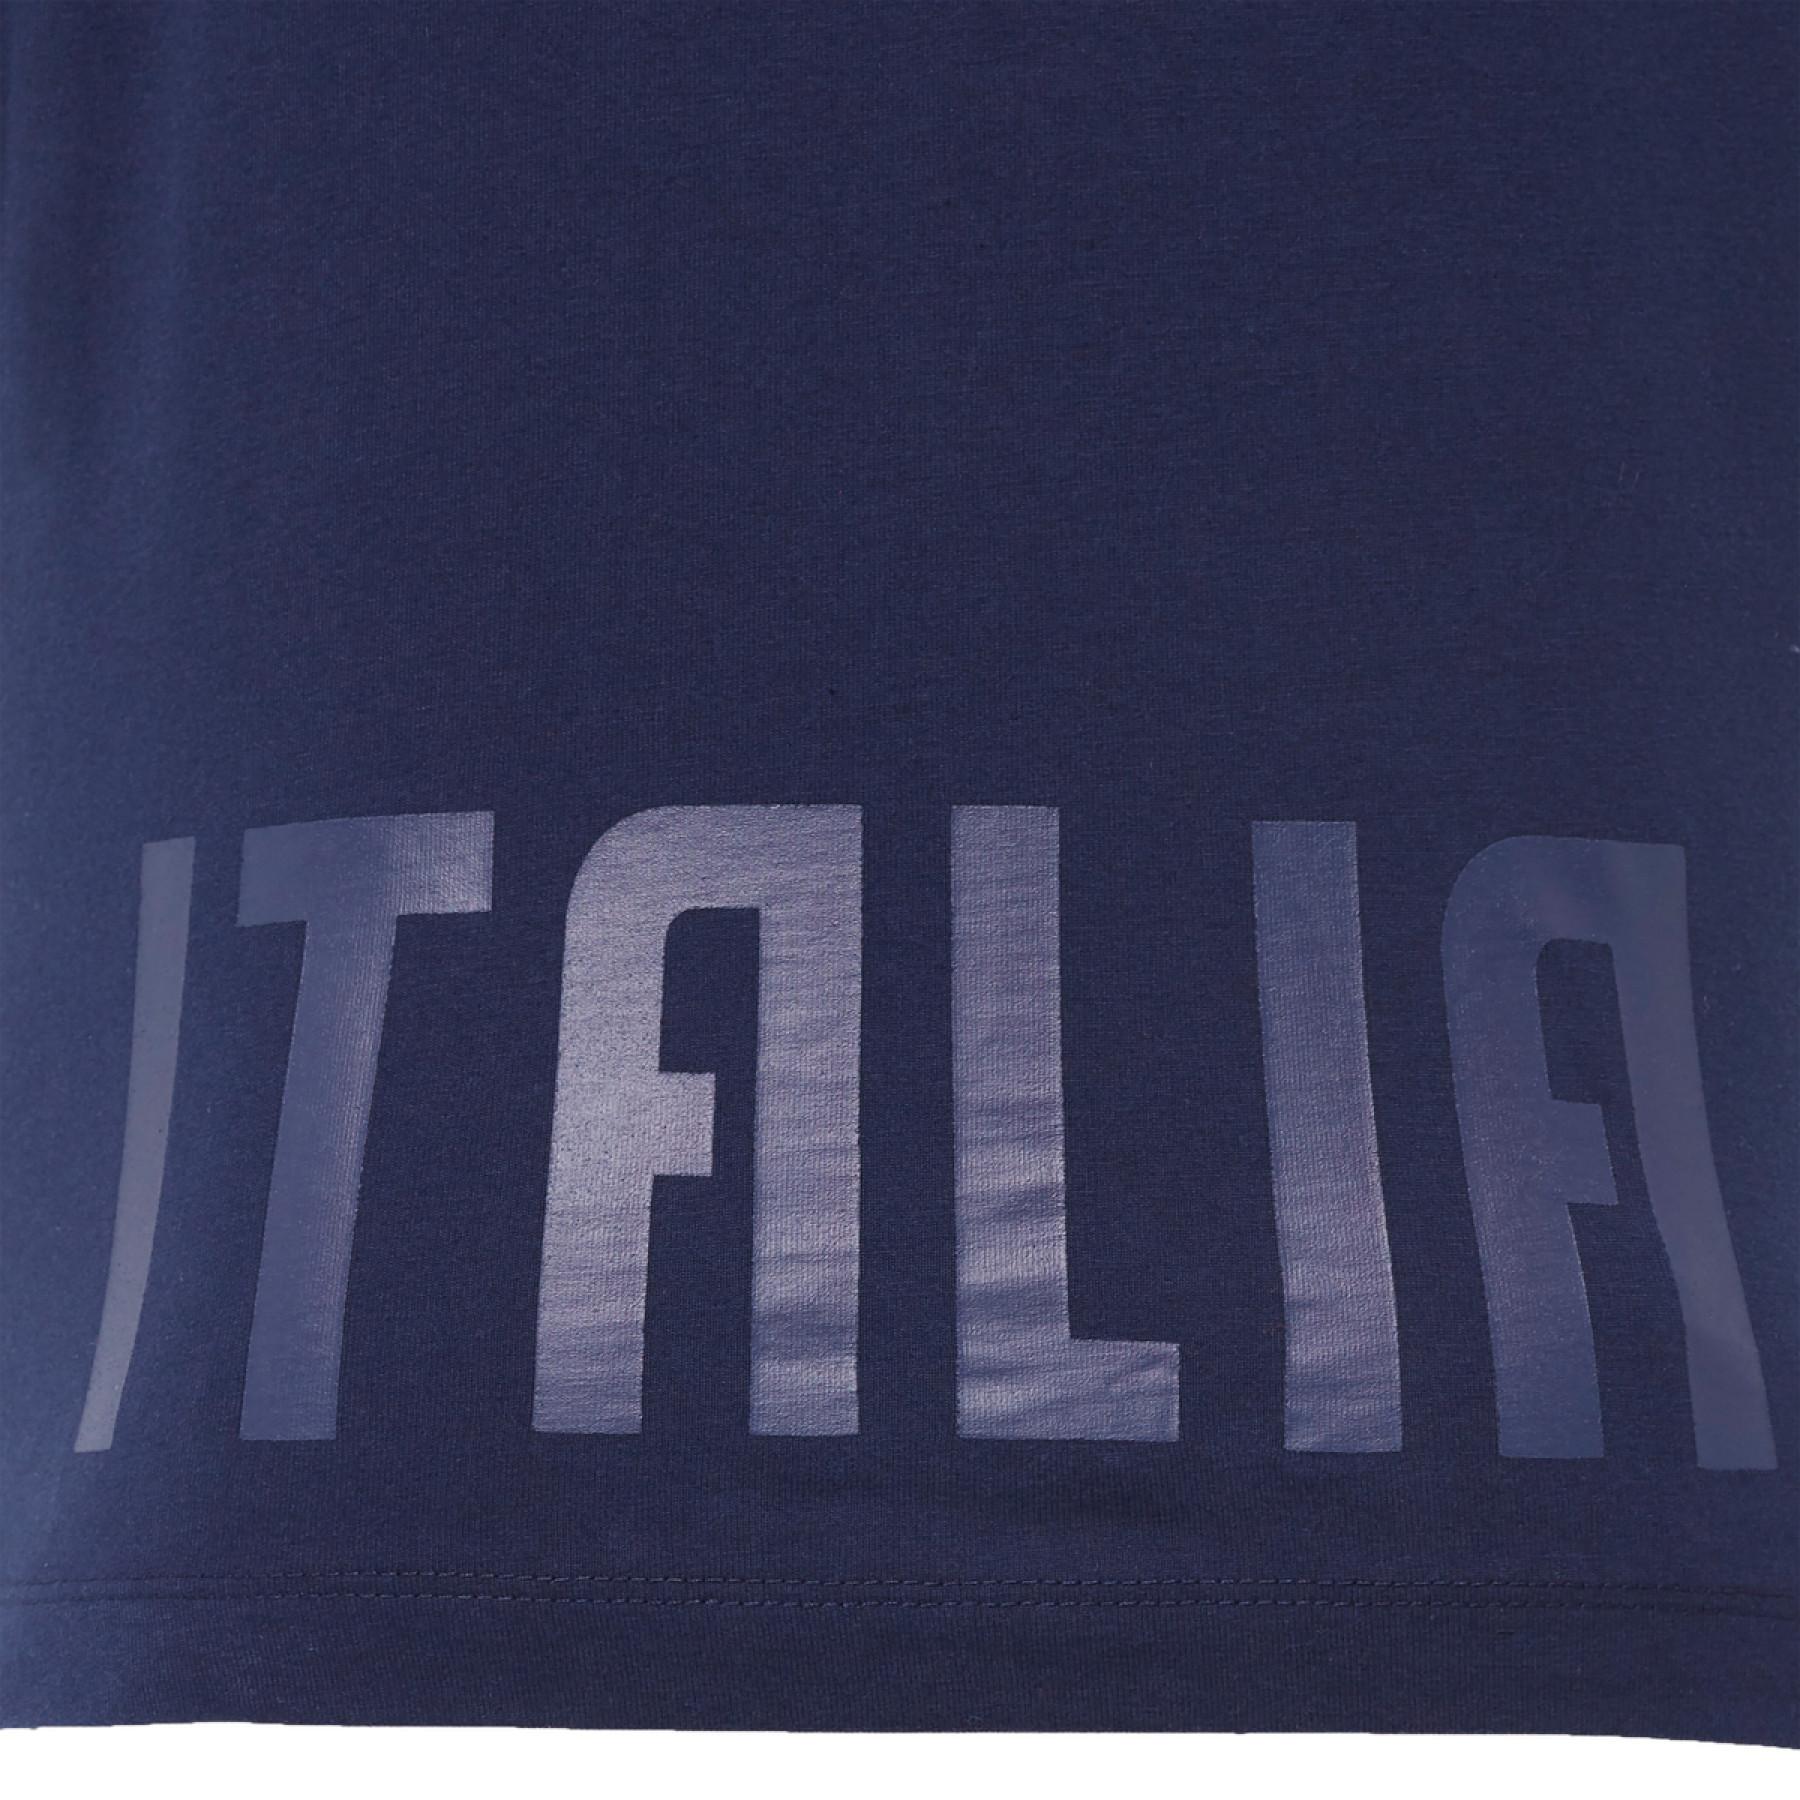 Camisa de viaje Italie rugby 2020/21